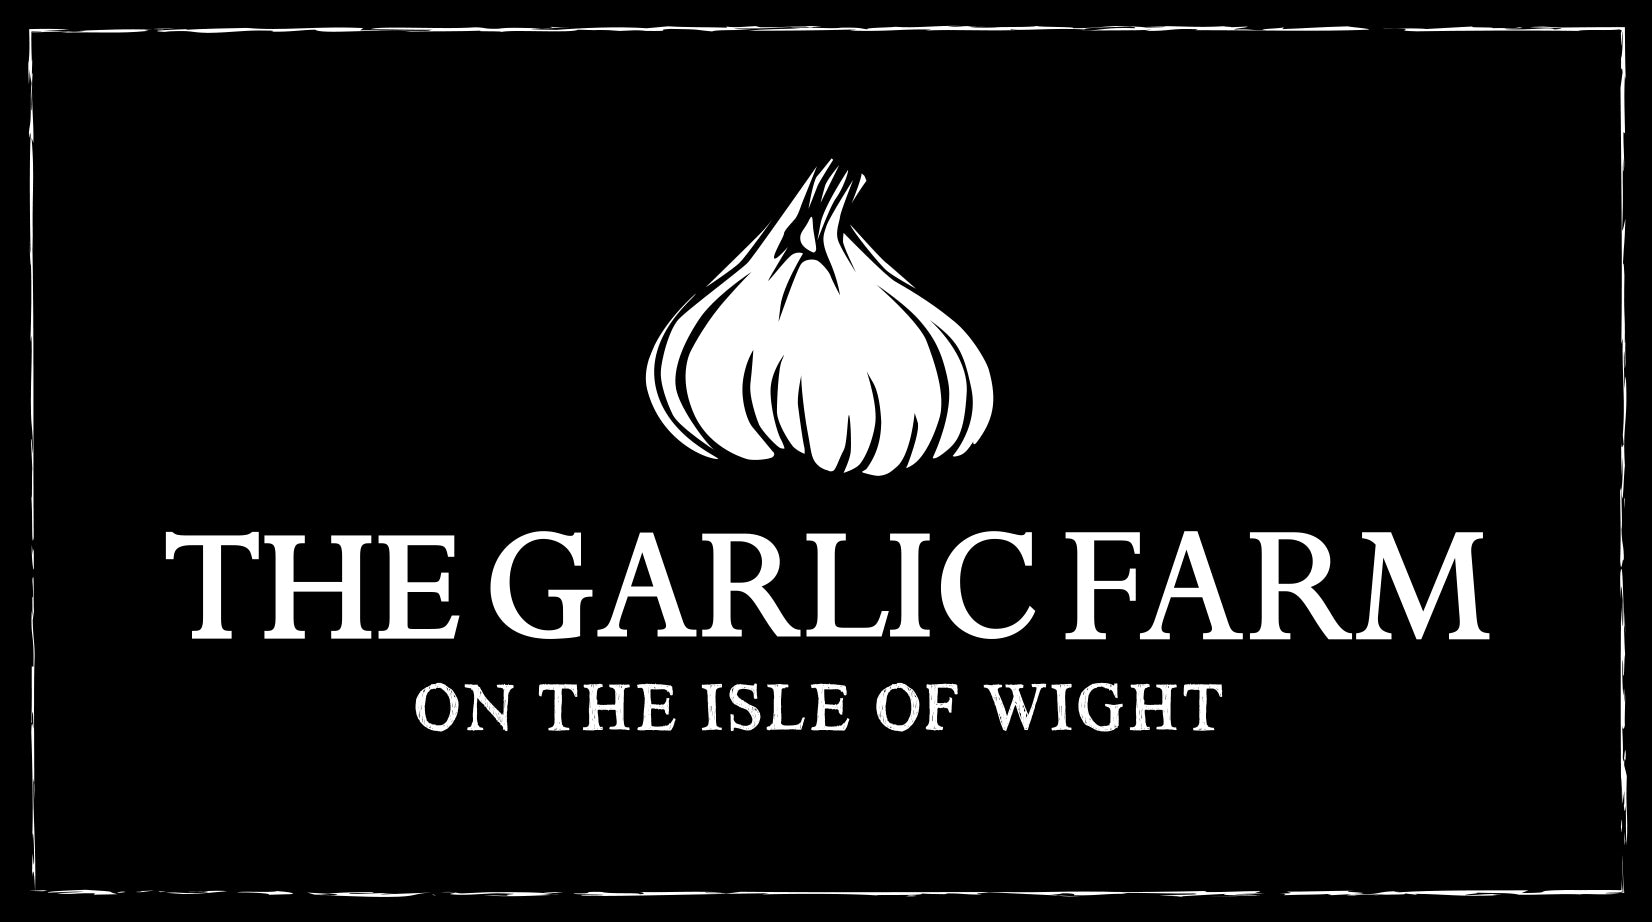 www.thegarlicfarm.co.uk